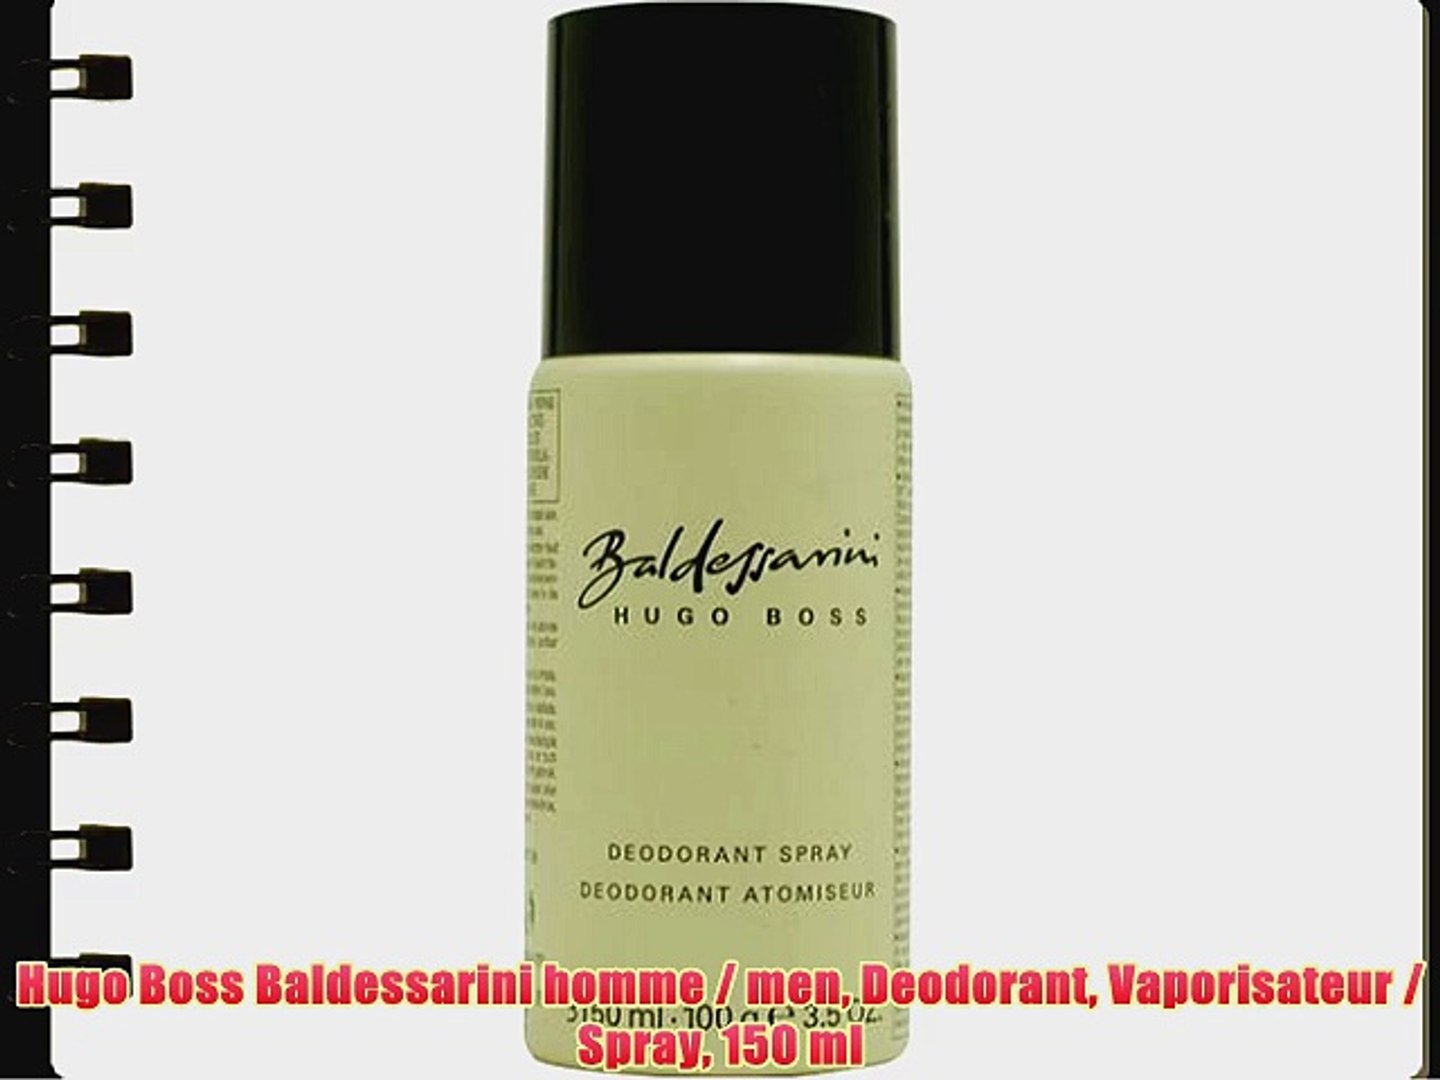 Hugo Boss Baldessarini homme / men Deodorant Vaporisateur / Spray ...